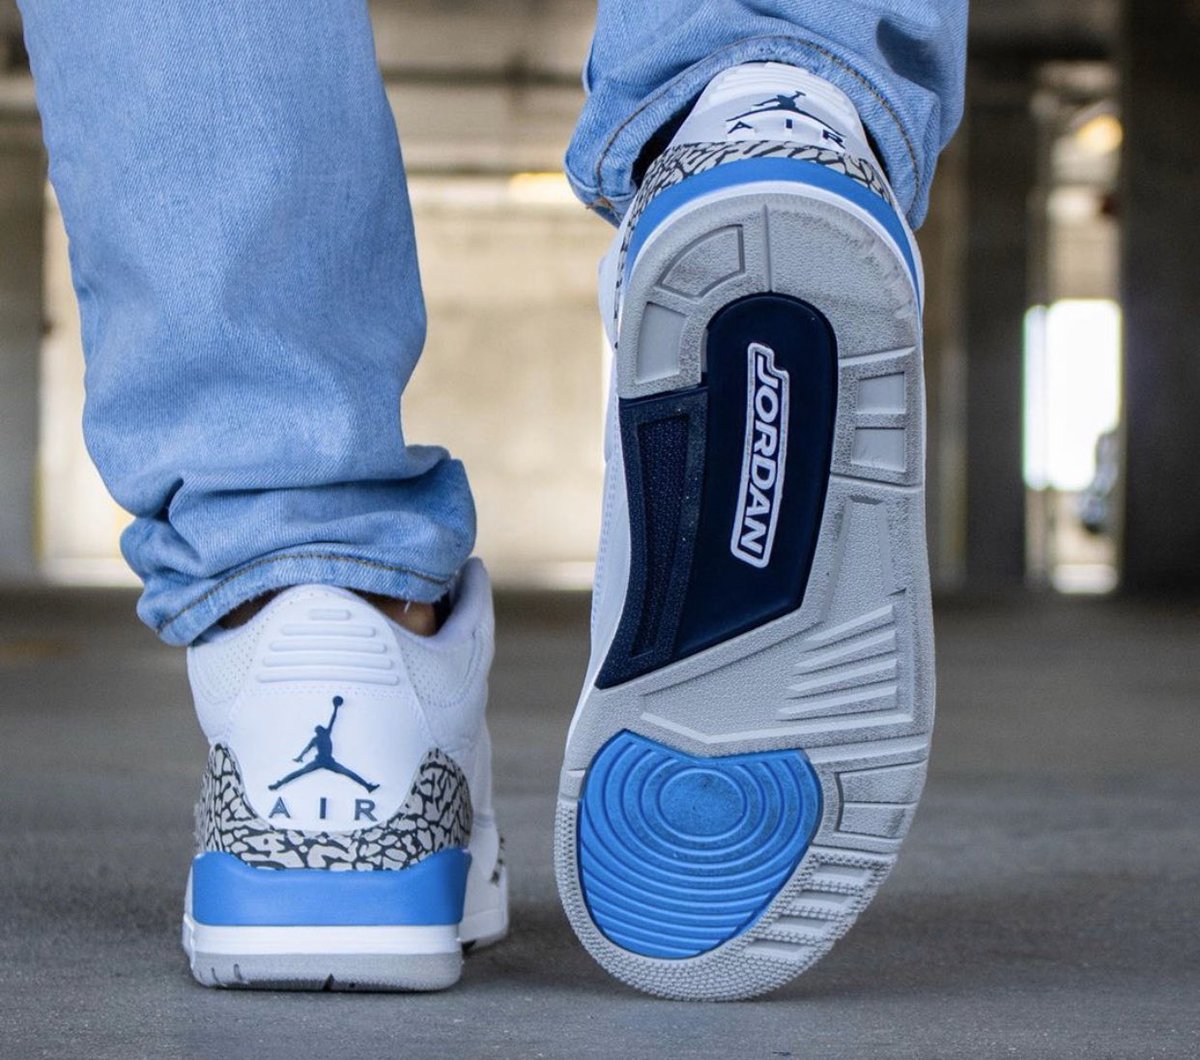 Sneaker Bar Detroit On Feet Photos Of The Unc Air Jordan 3 Dropping This Weekend T Co 4wrufvve